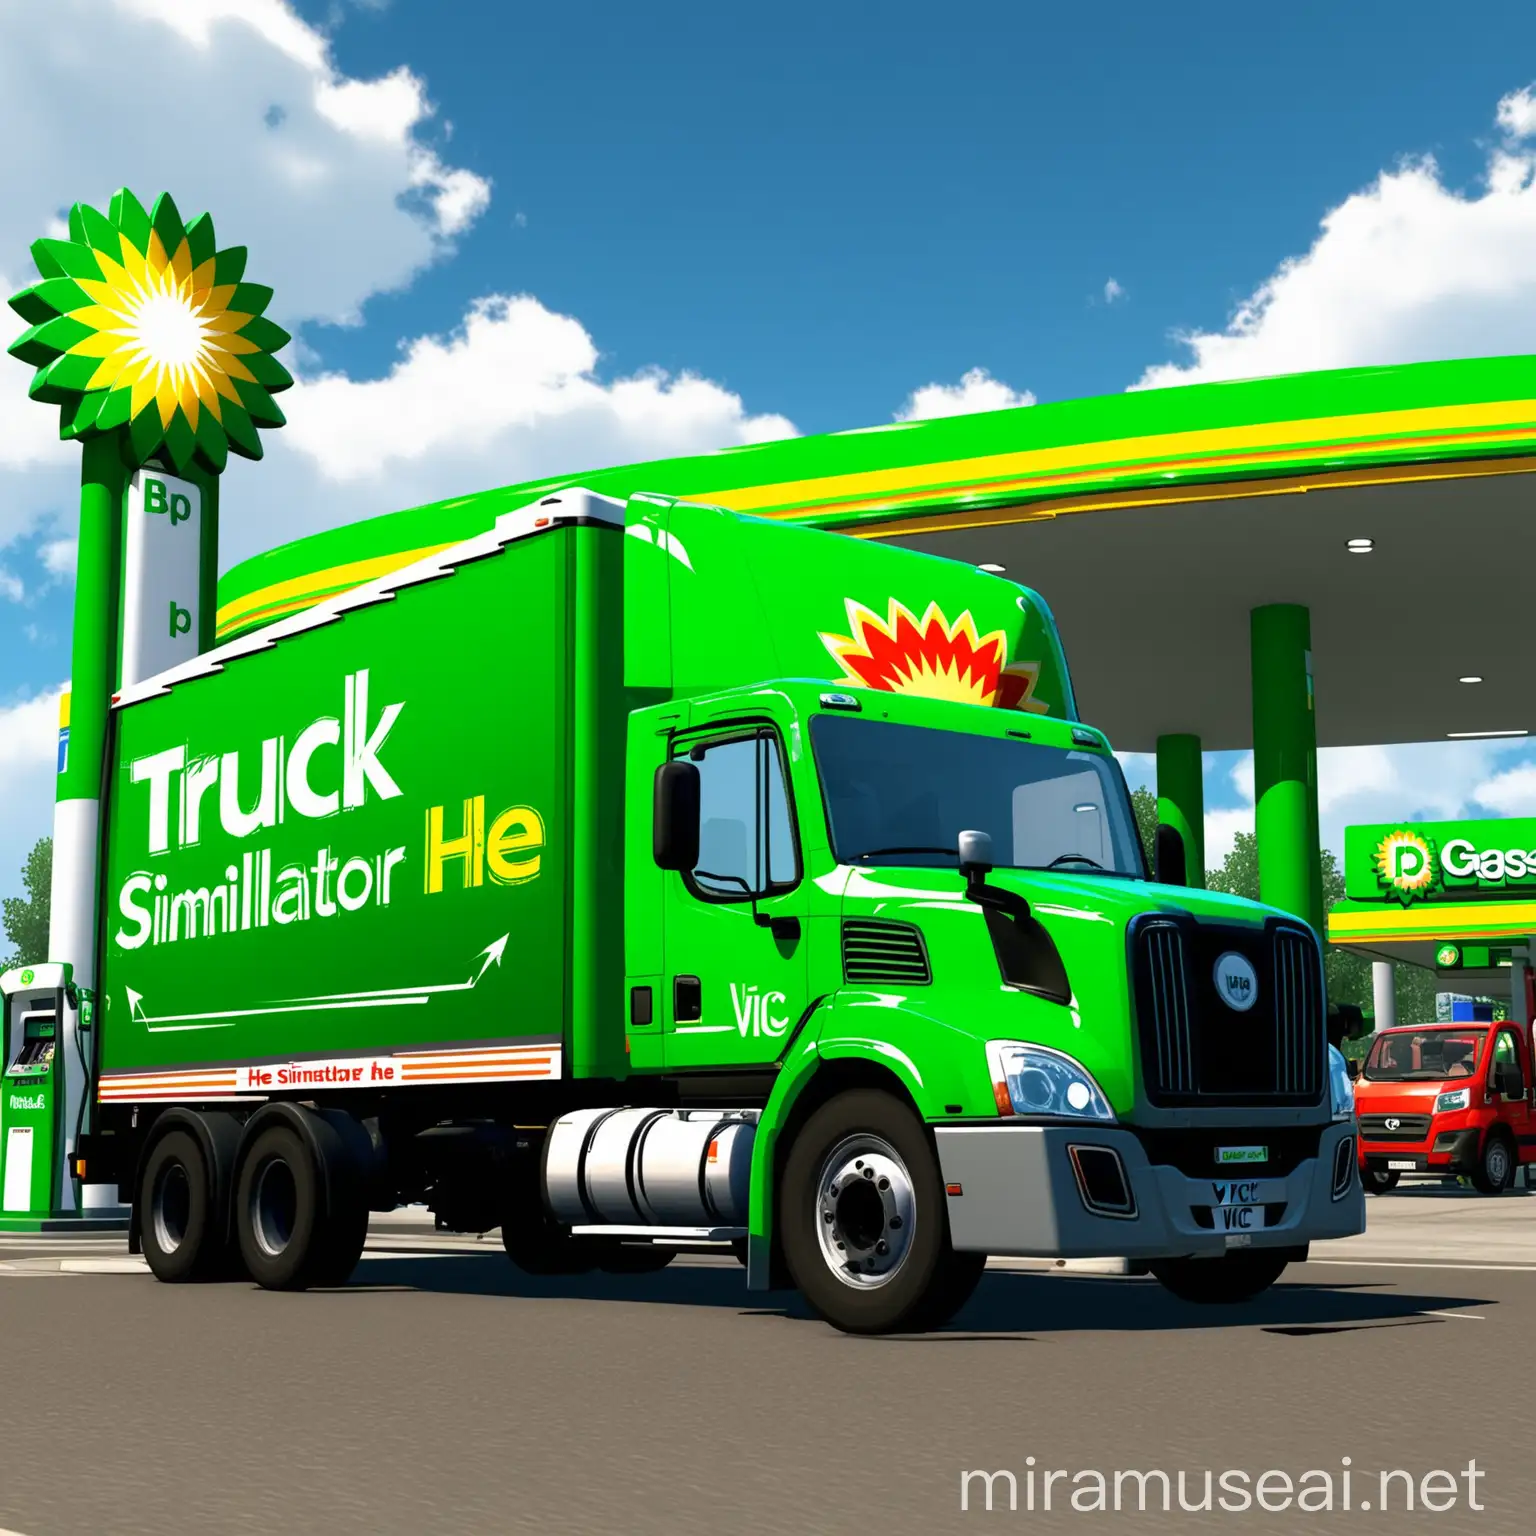 Truck Simulator Ultimate VIC at BP Gas Station